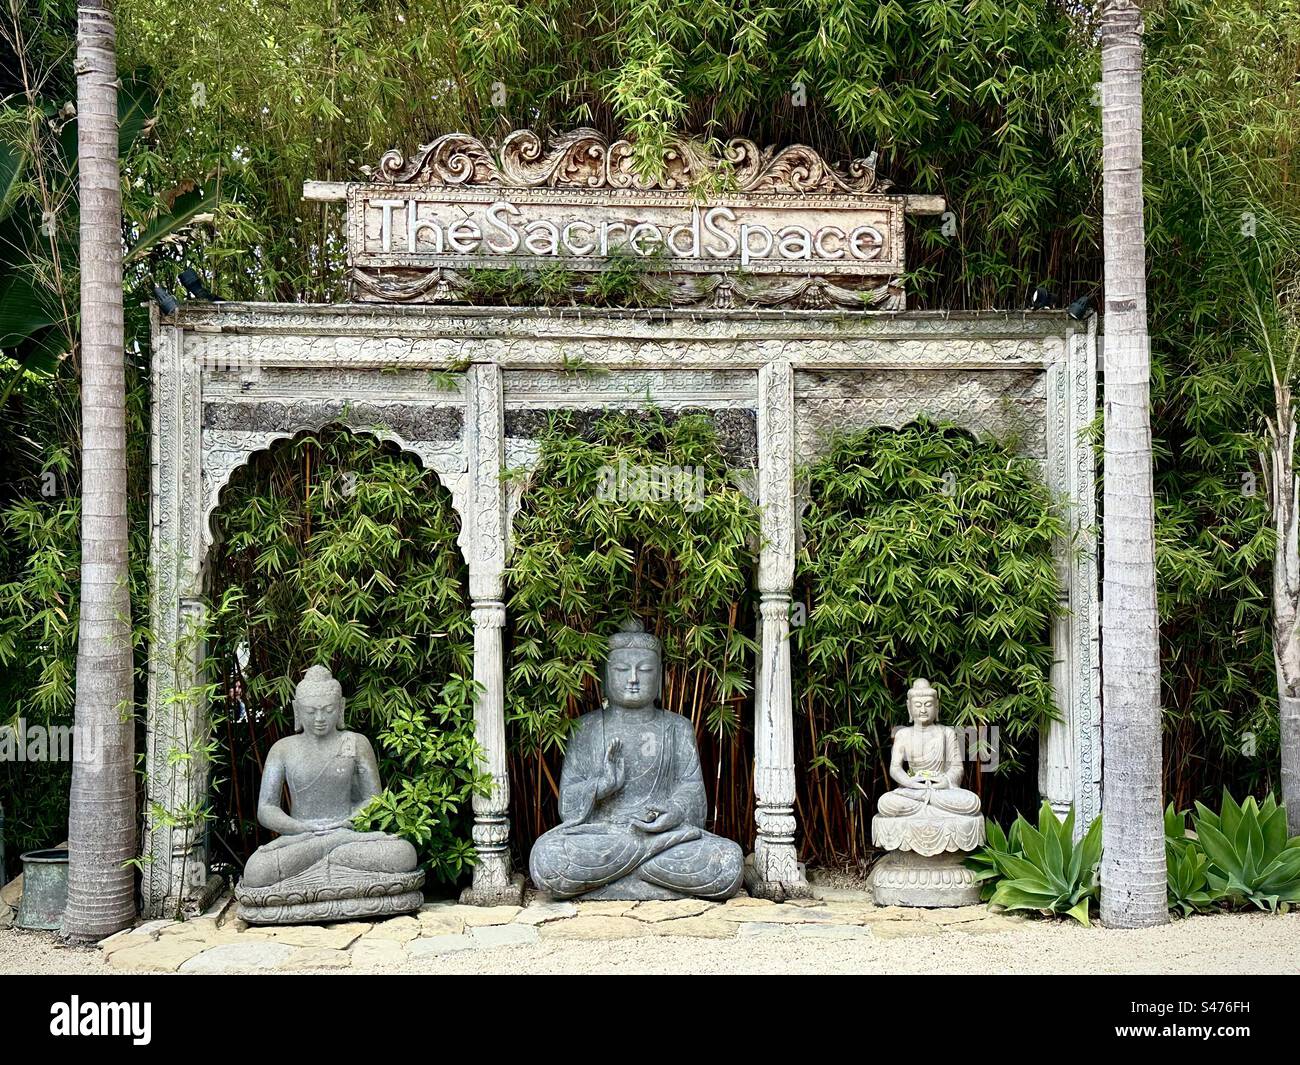 Buddhas außerhalb DES HEILIGEN RAUMES, Santa Barbara, CA Stockfoto